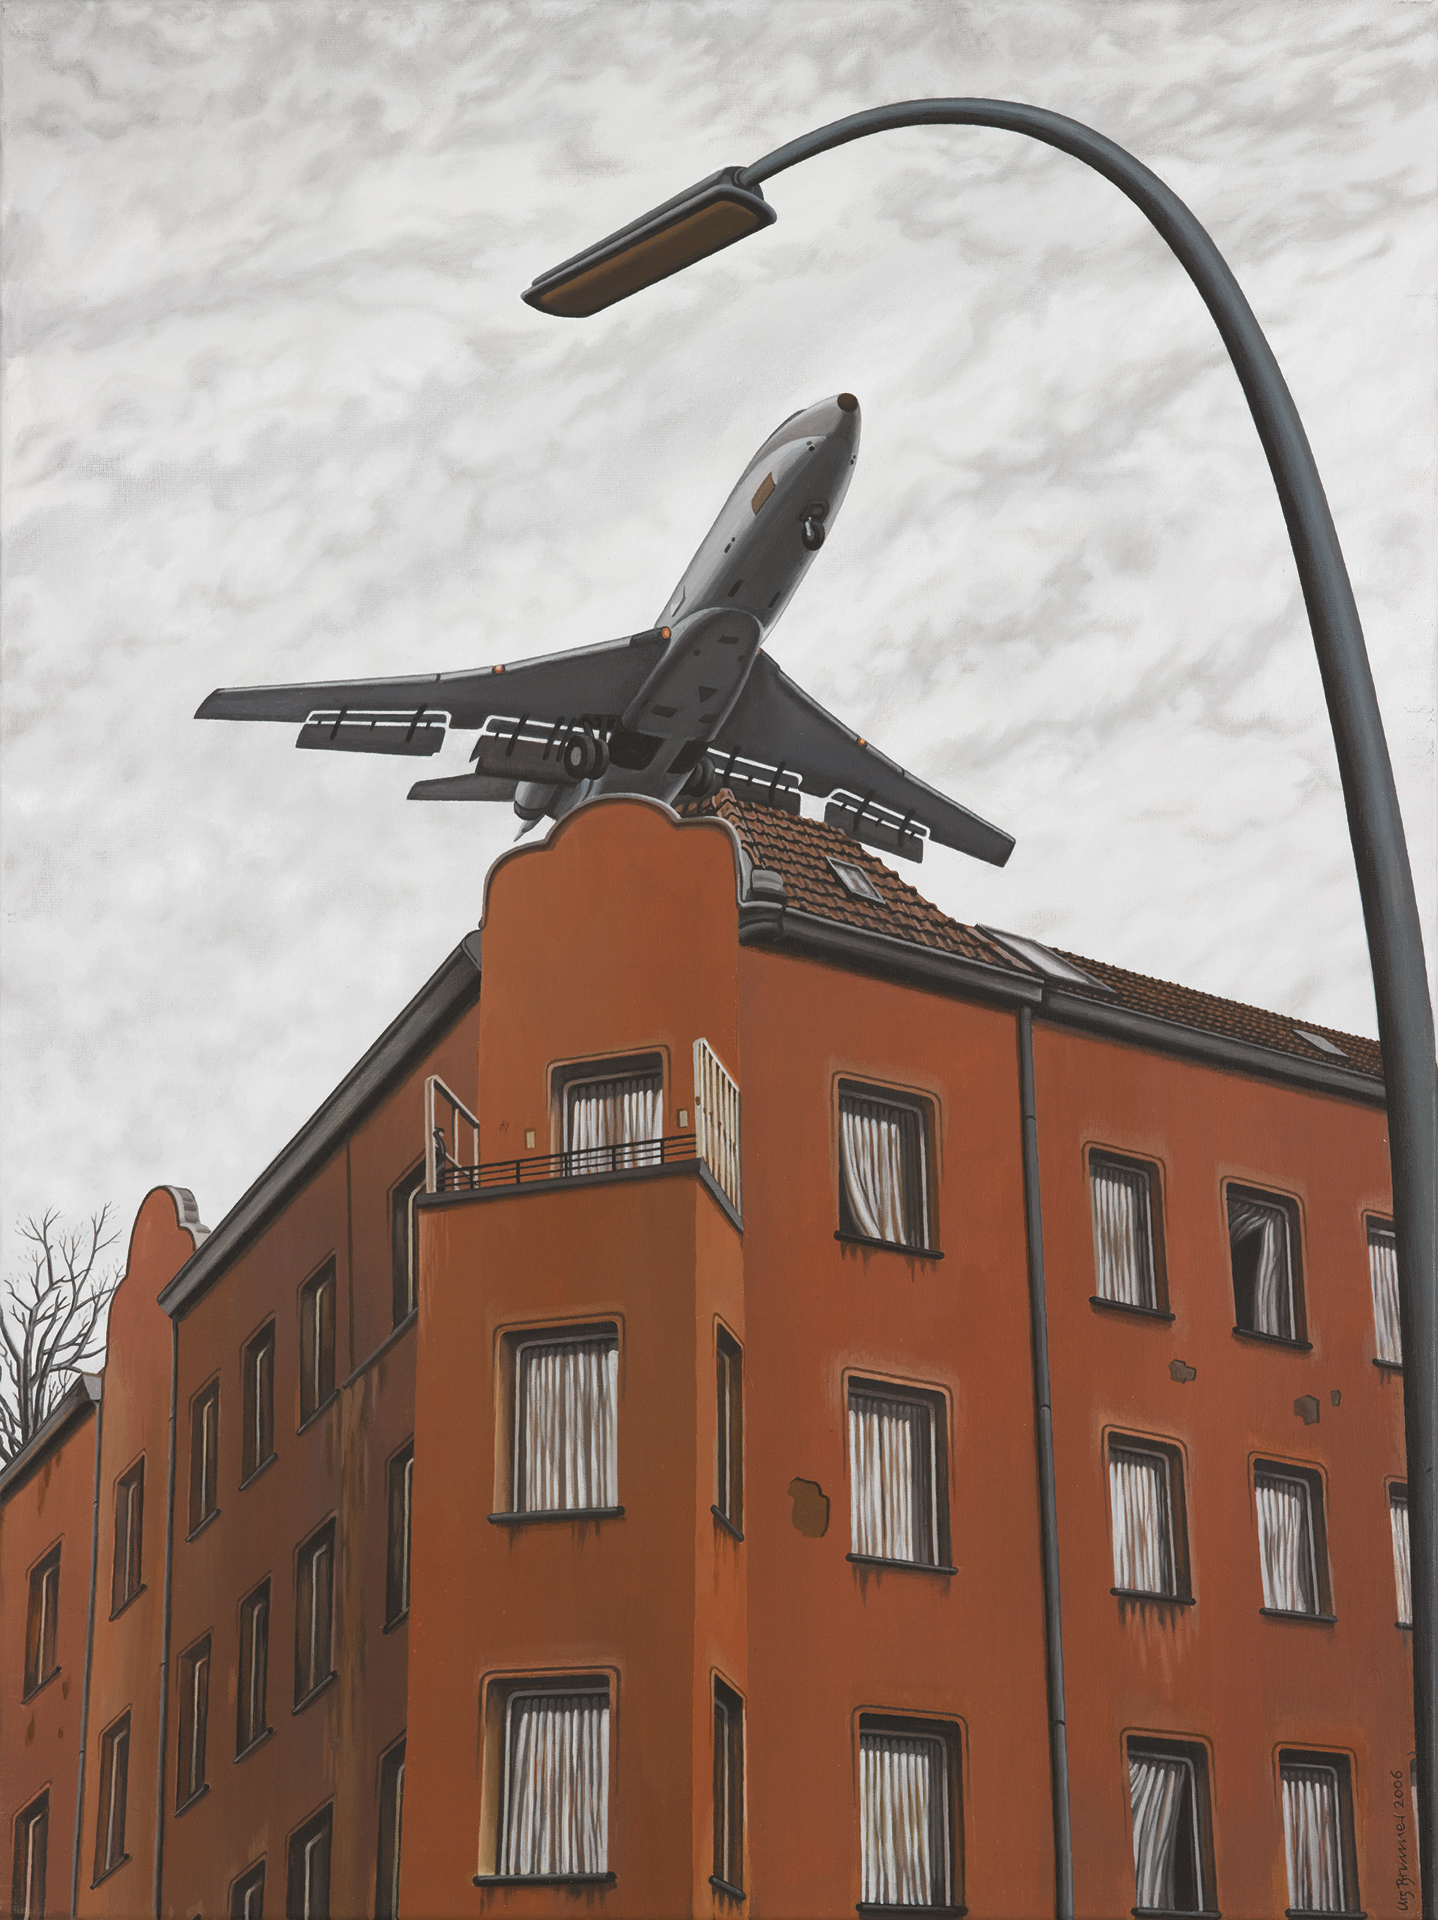 Städteflug ll / Berlin 1972, 2006, Acryl auf Leinwand, 80 x 60 cm